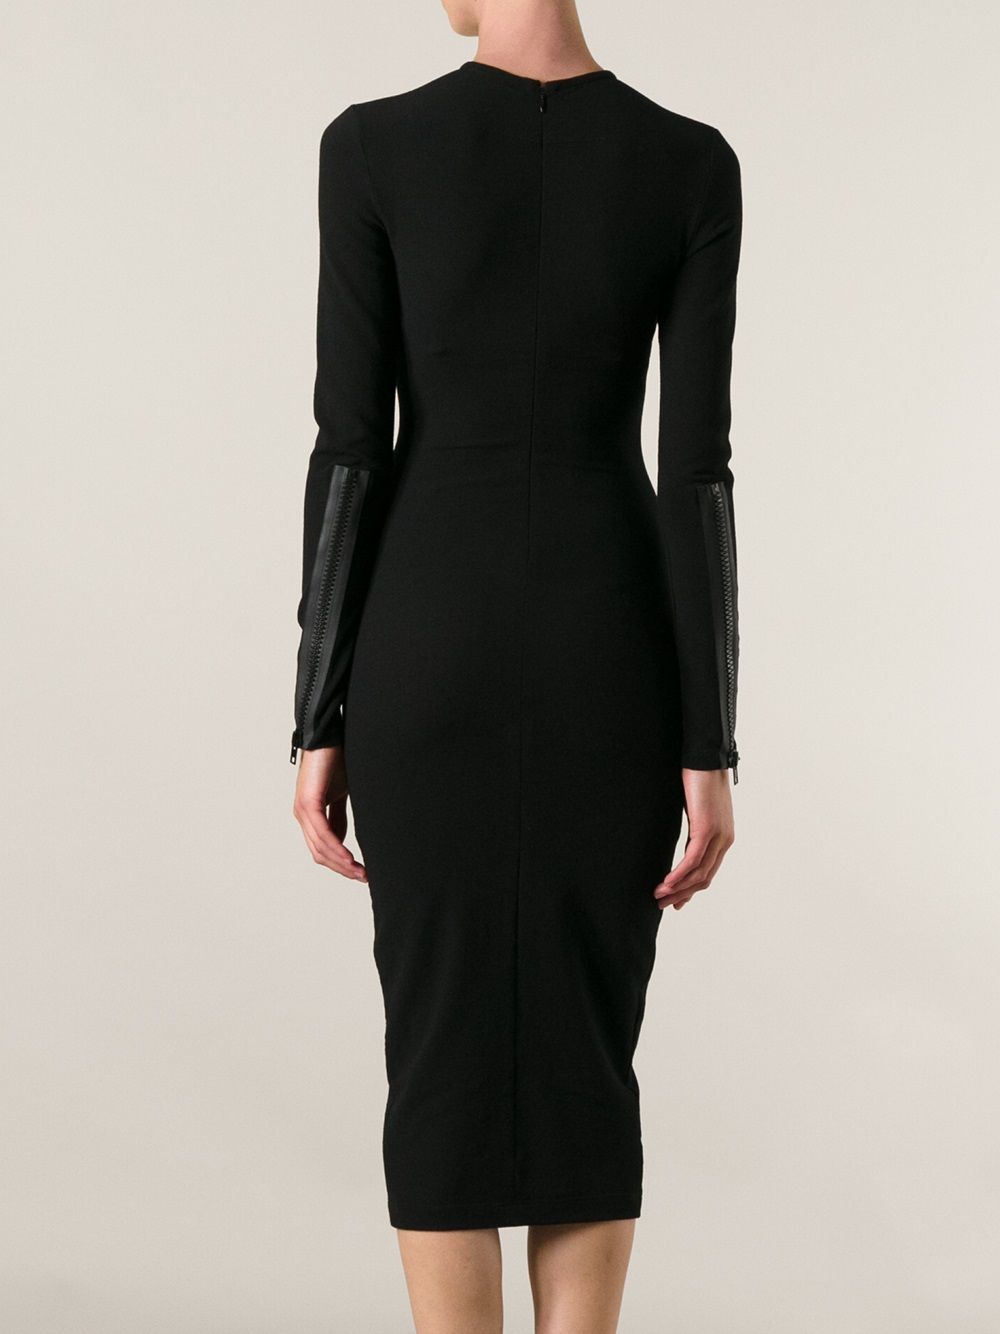 Givenchy Bodycon Dress - Farfetch